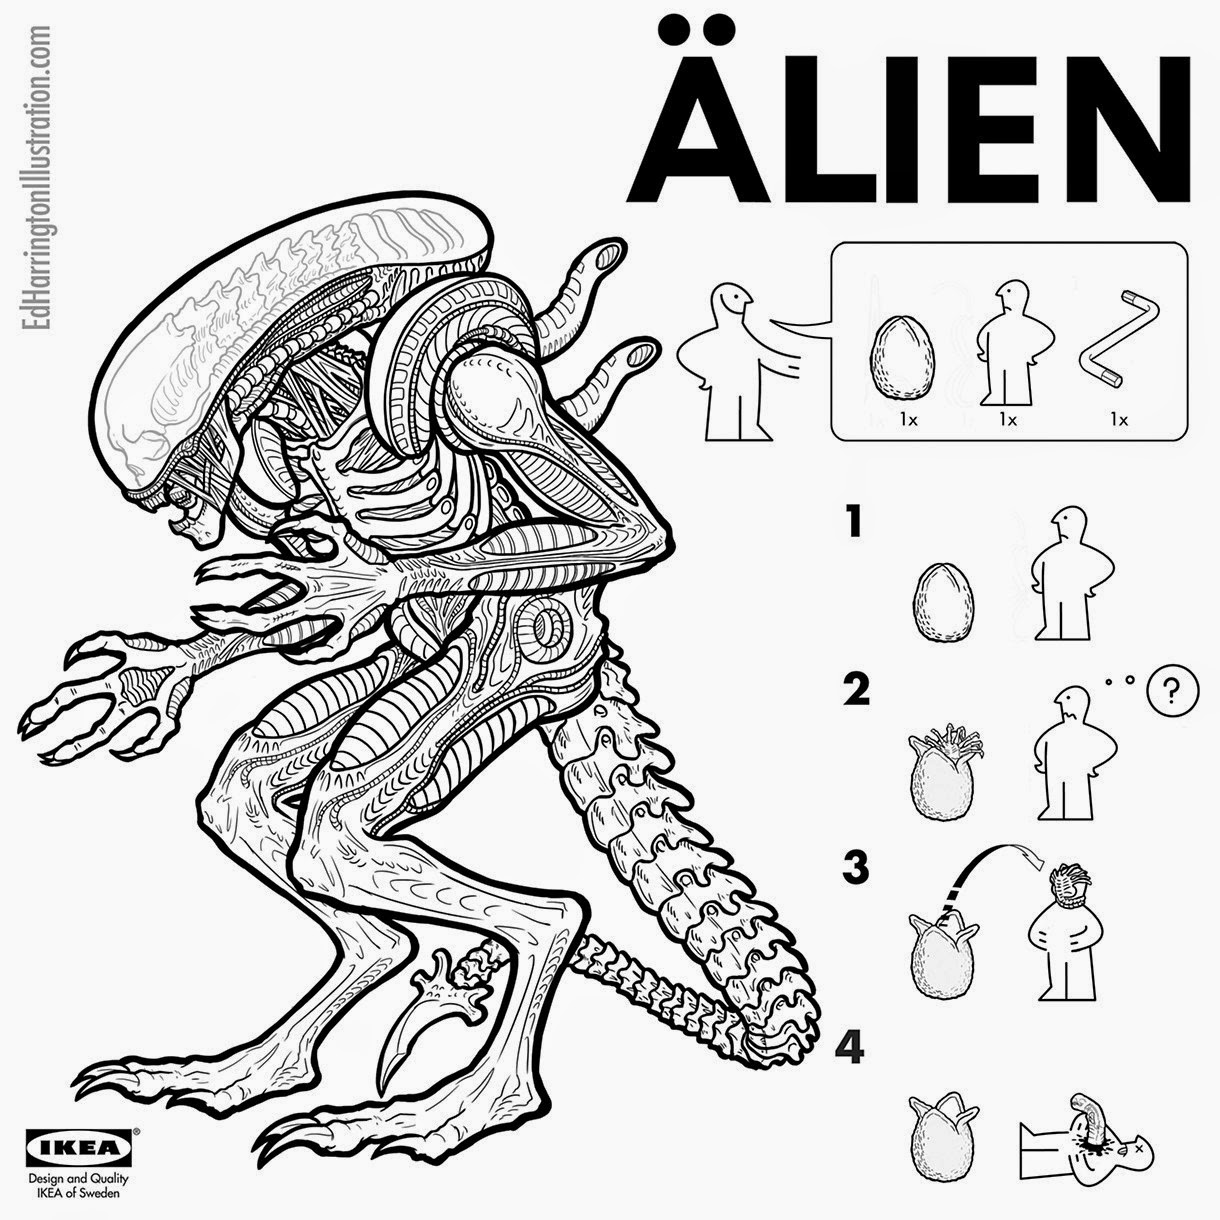 01-Alien-Ed-Harrington-Illustrations-Assemble-Monsters-with-IKEA-Instructions-www-designstack-co